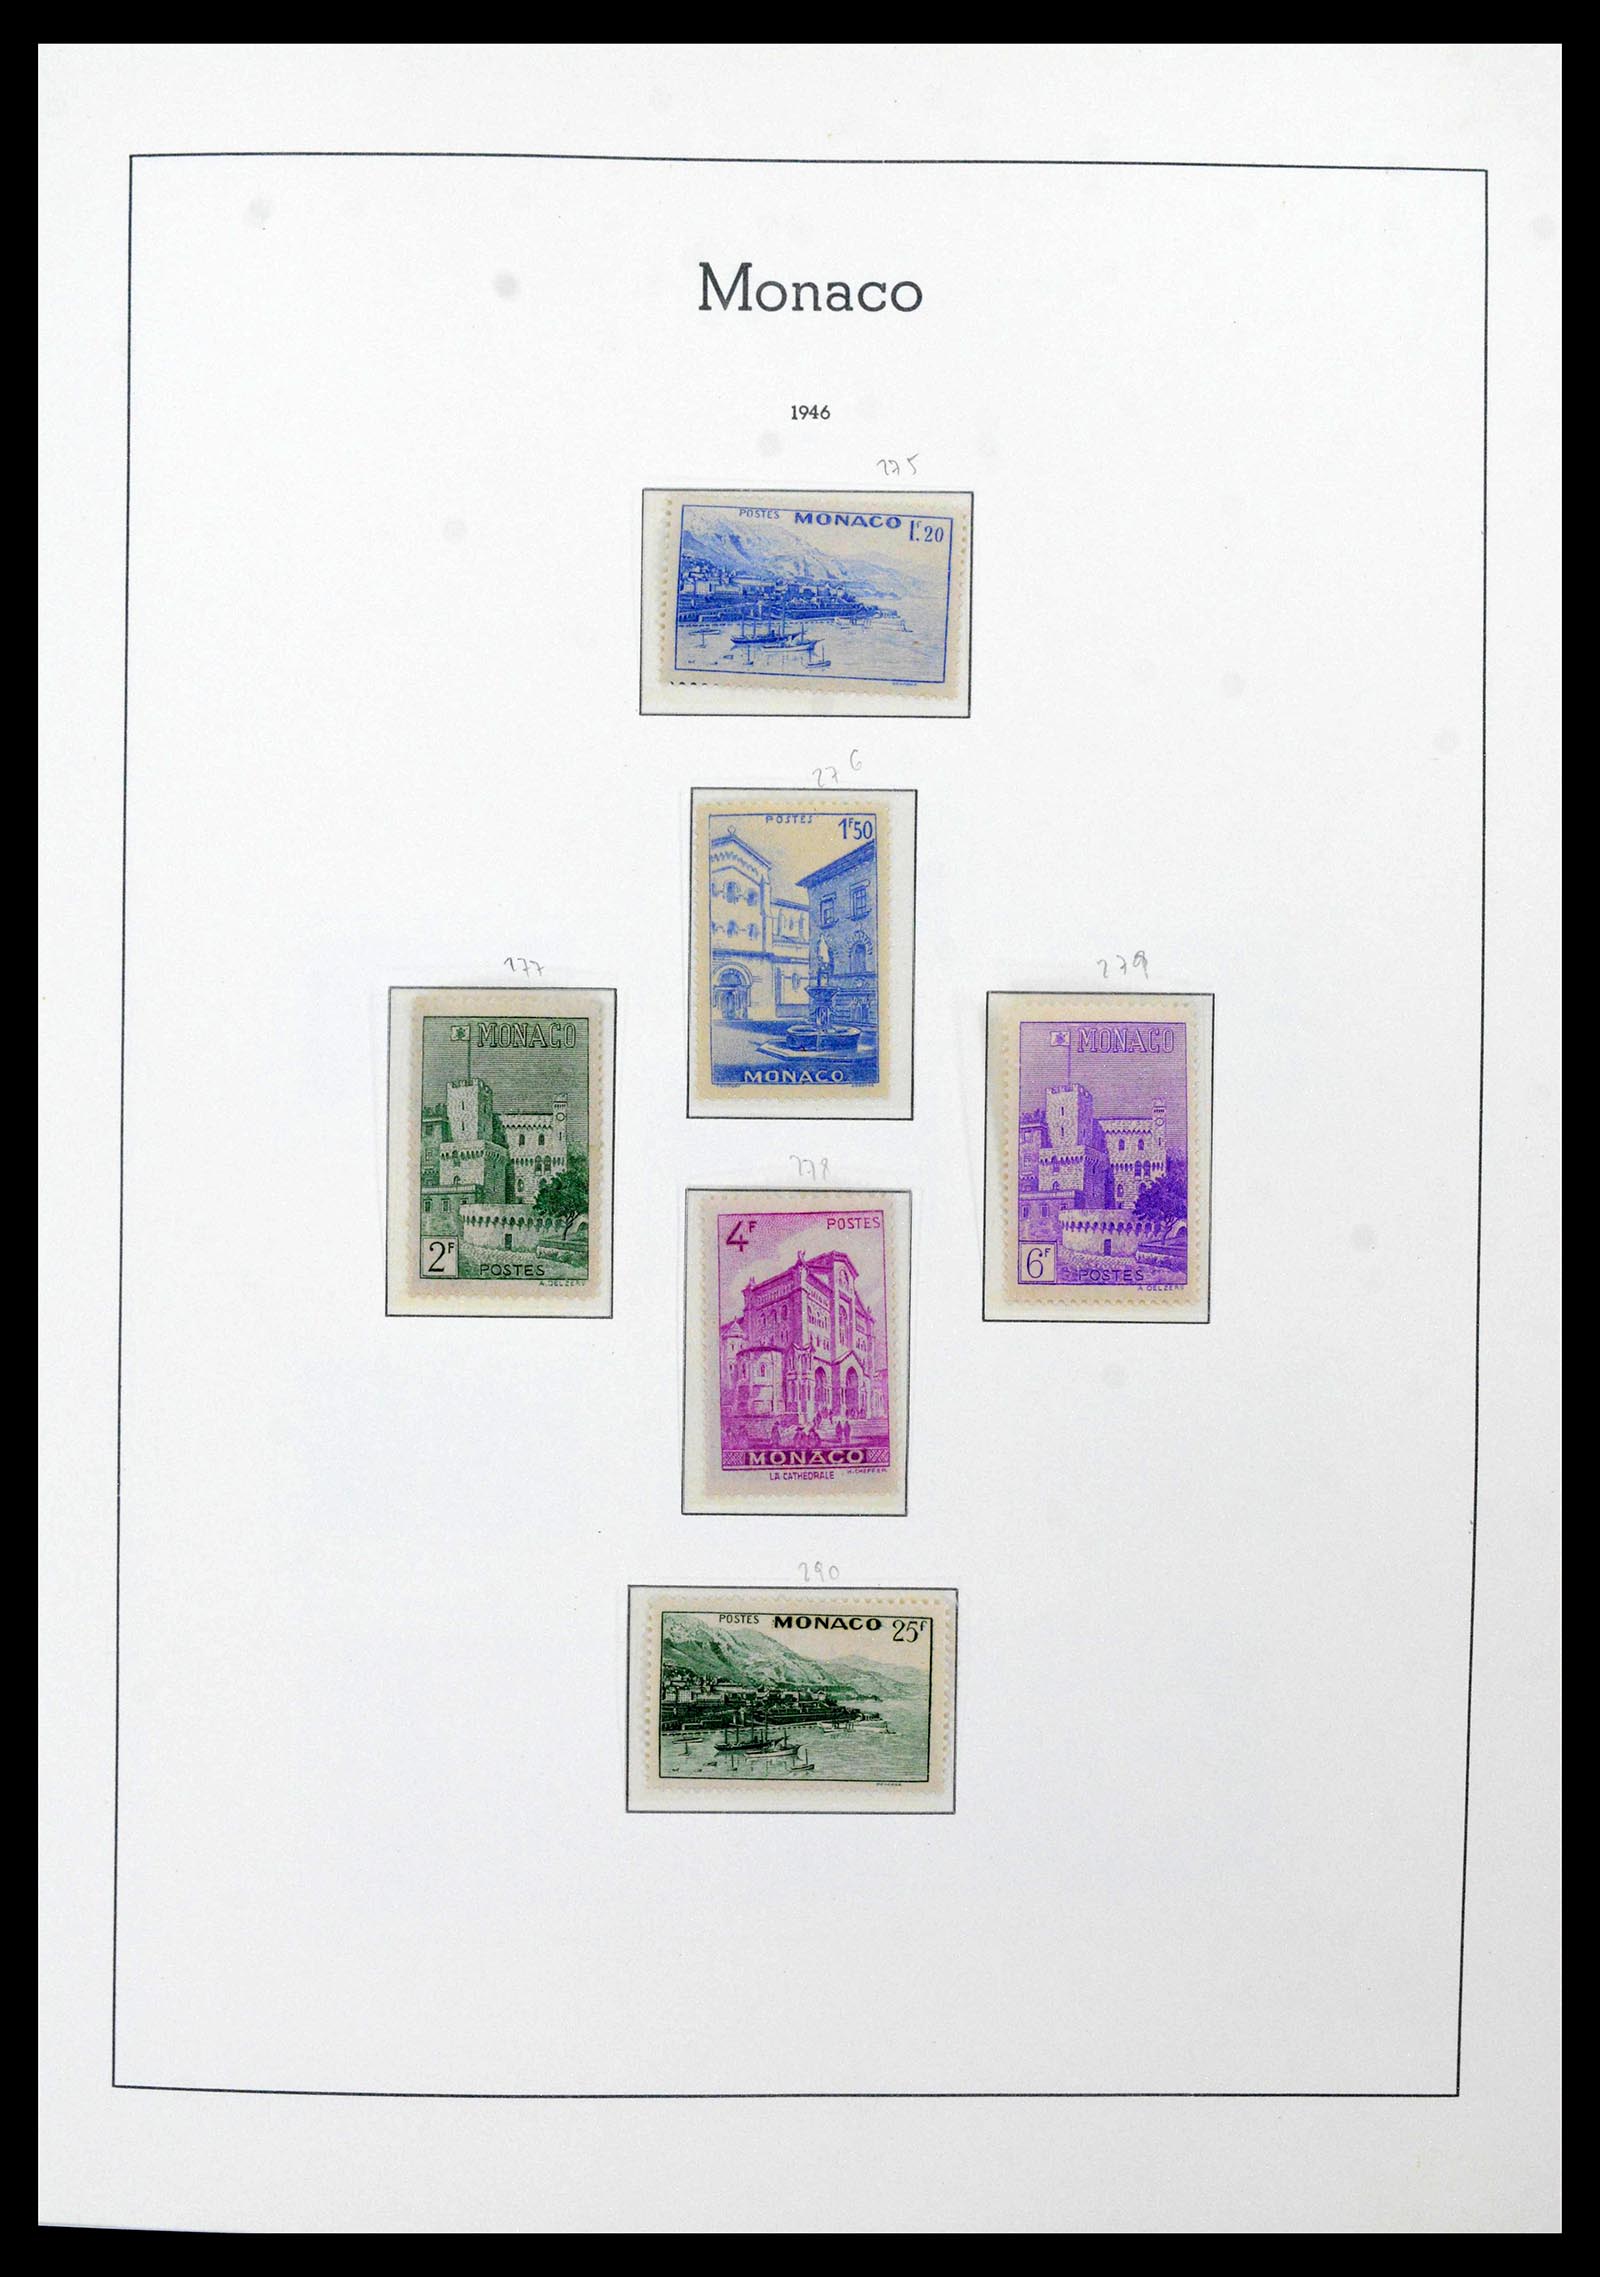 39250 0029 - Stamp collection 39250 Monaco 1885-1995.